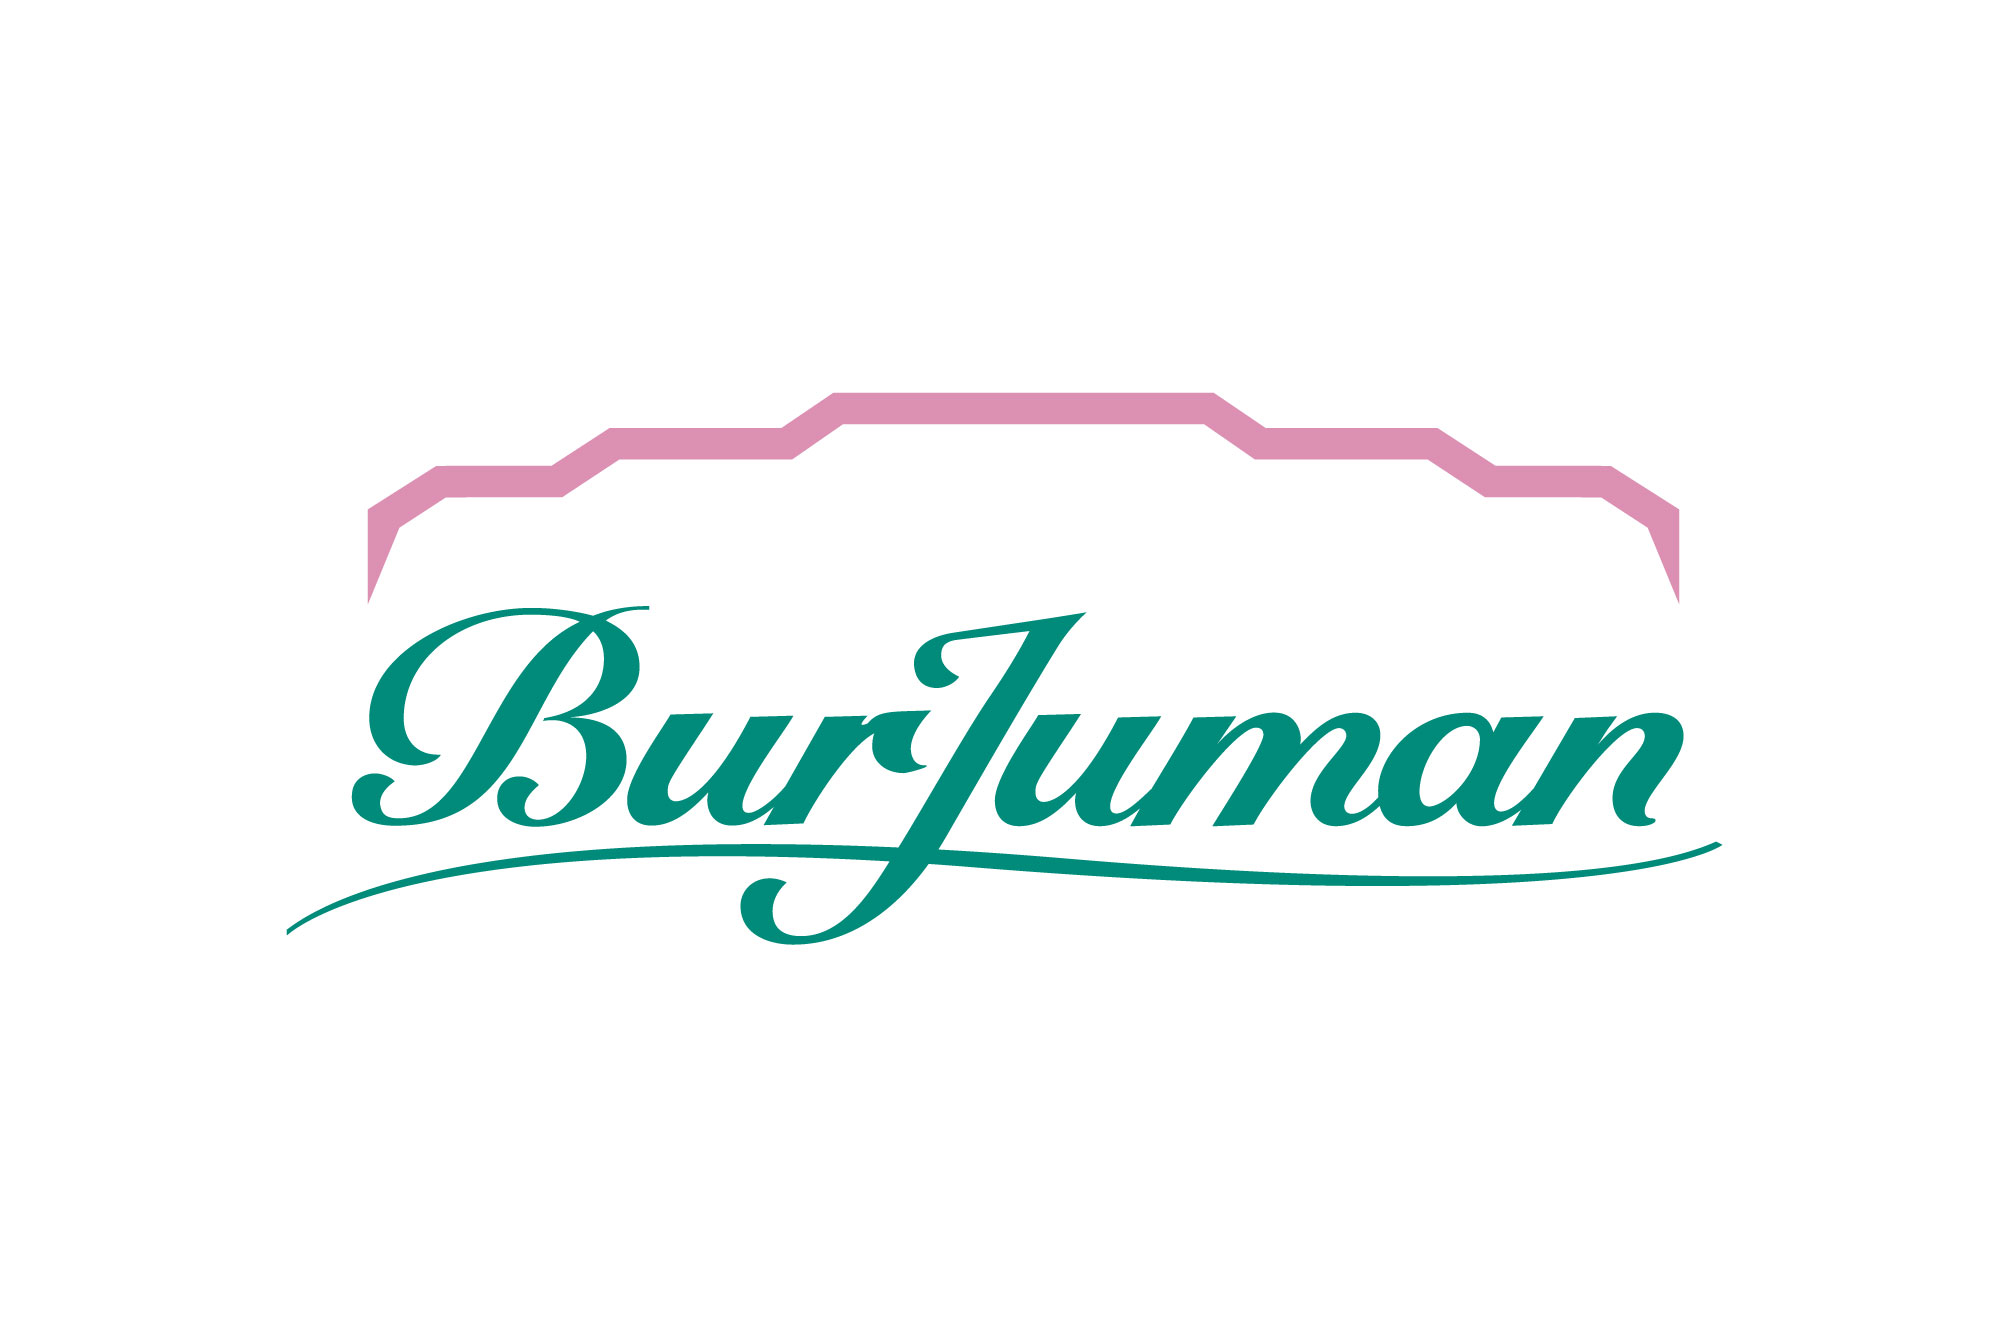  The old BurJuman logo. 